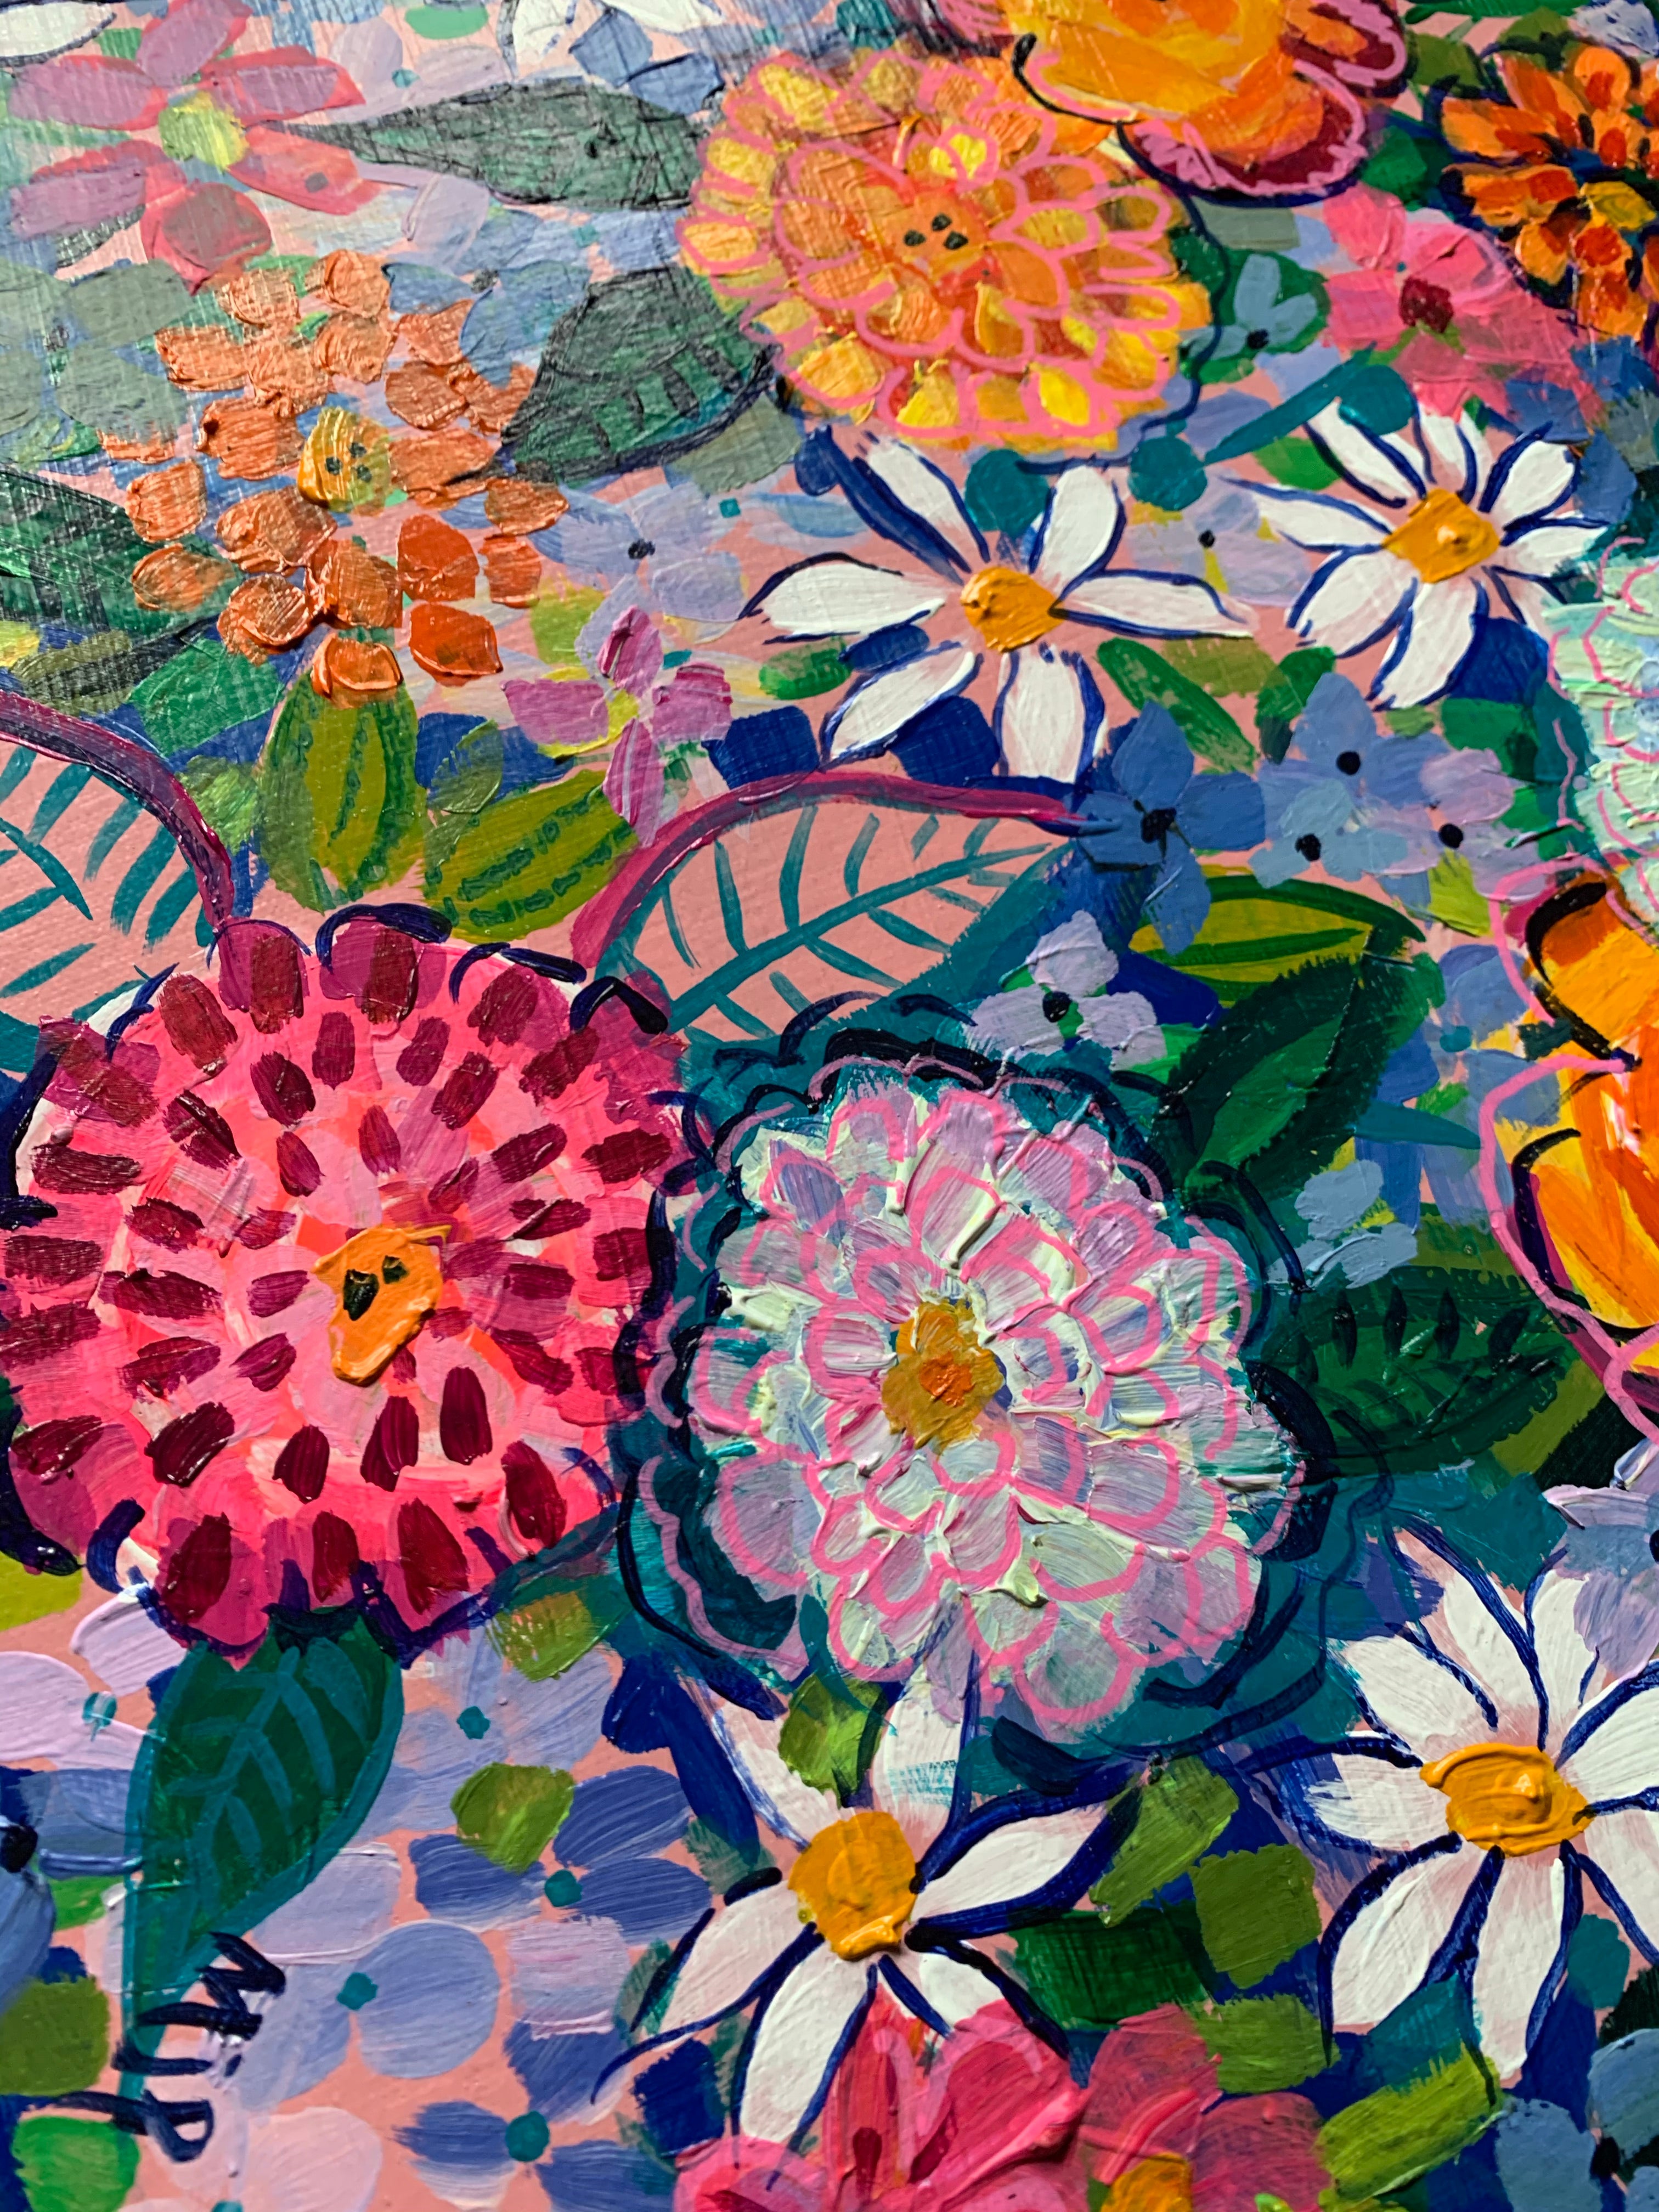 Vibrant “Zinnia Garden” Acrylic & Ink on Canvas 16”x20”